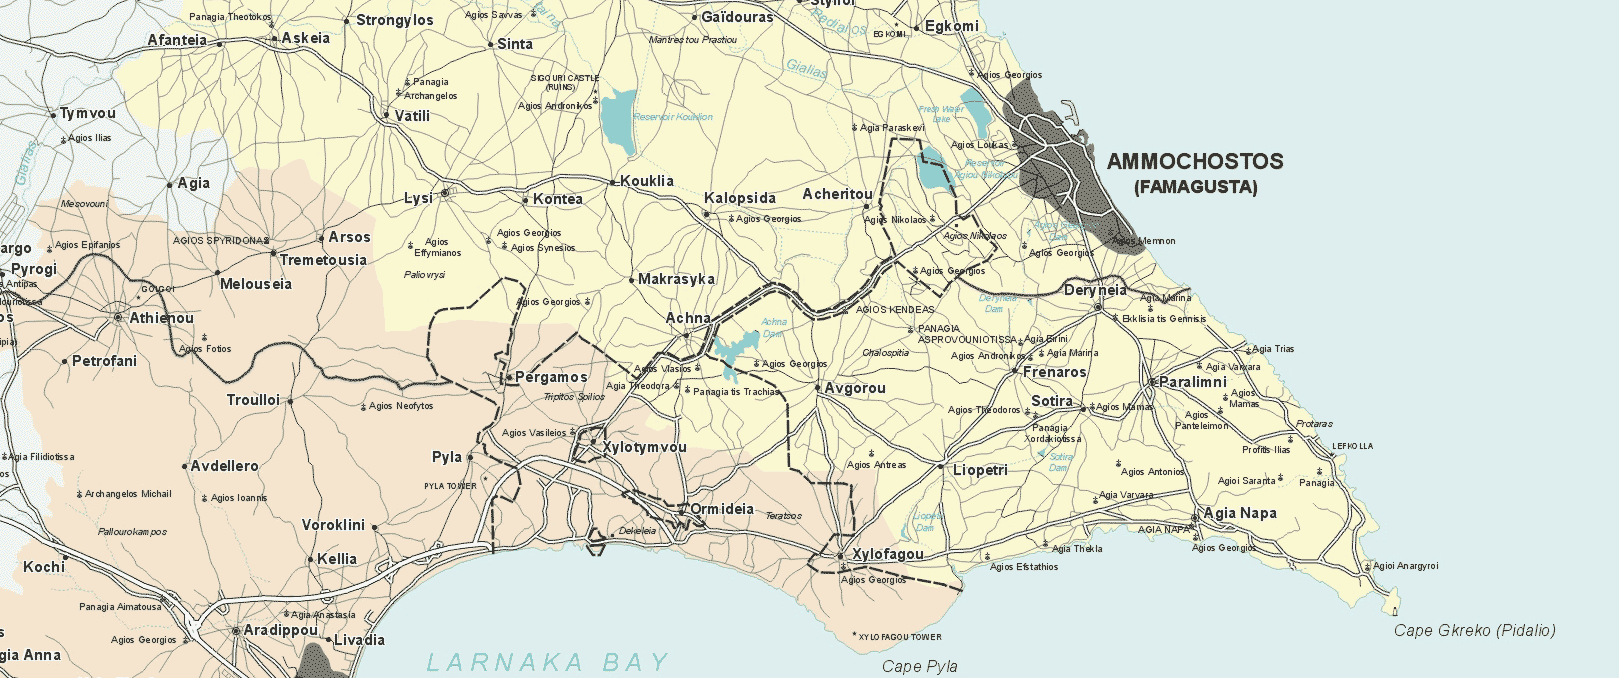 Лиопетри кипр на карте британия столица какой страны